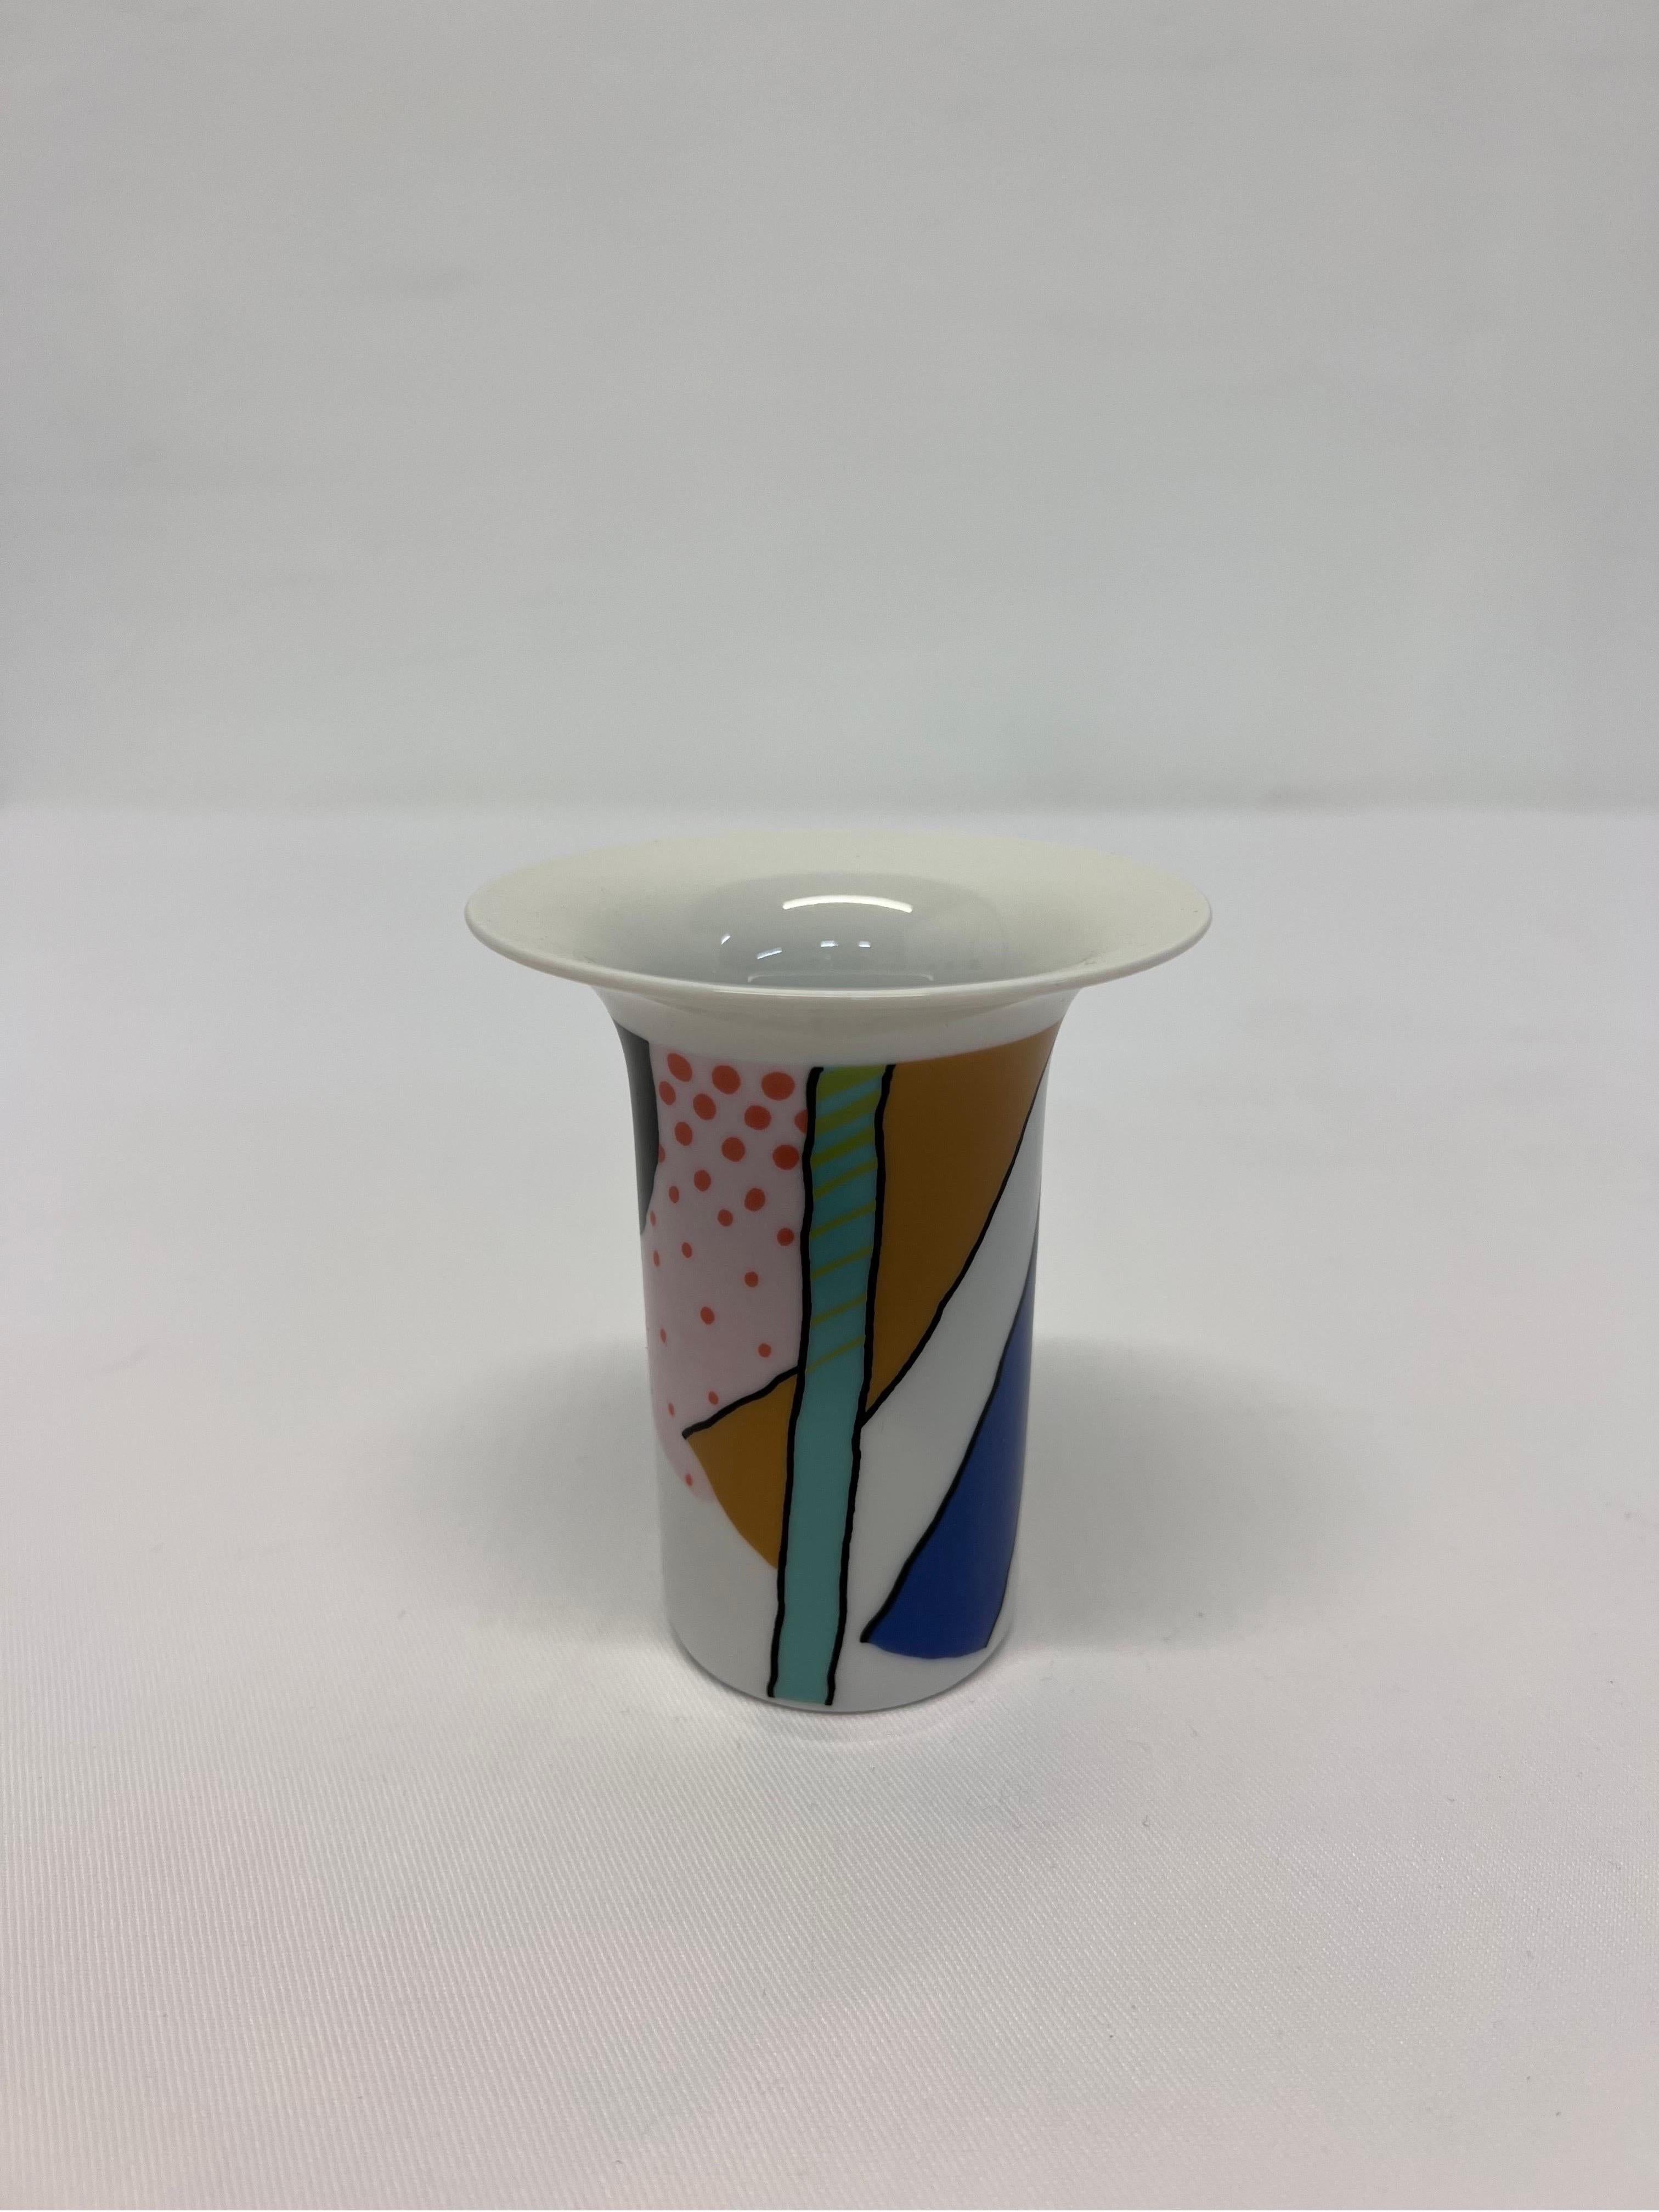 Postmodern porcelain bud vase by Rosenthal, 1980s.